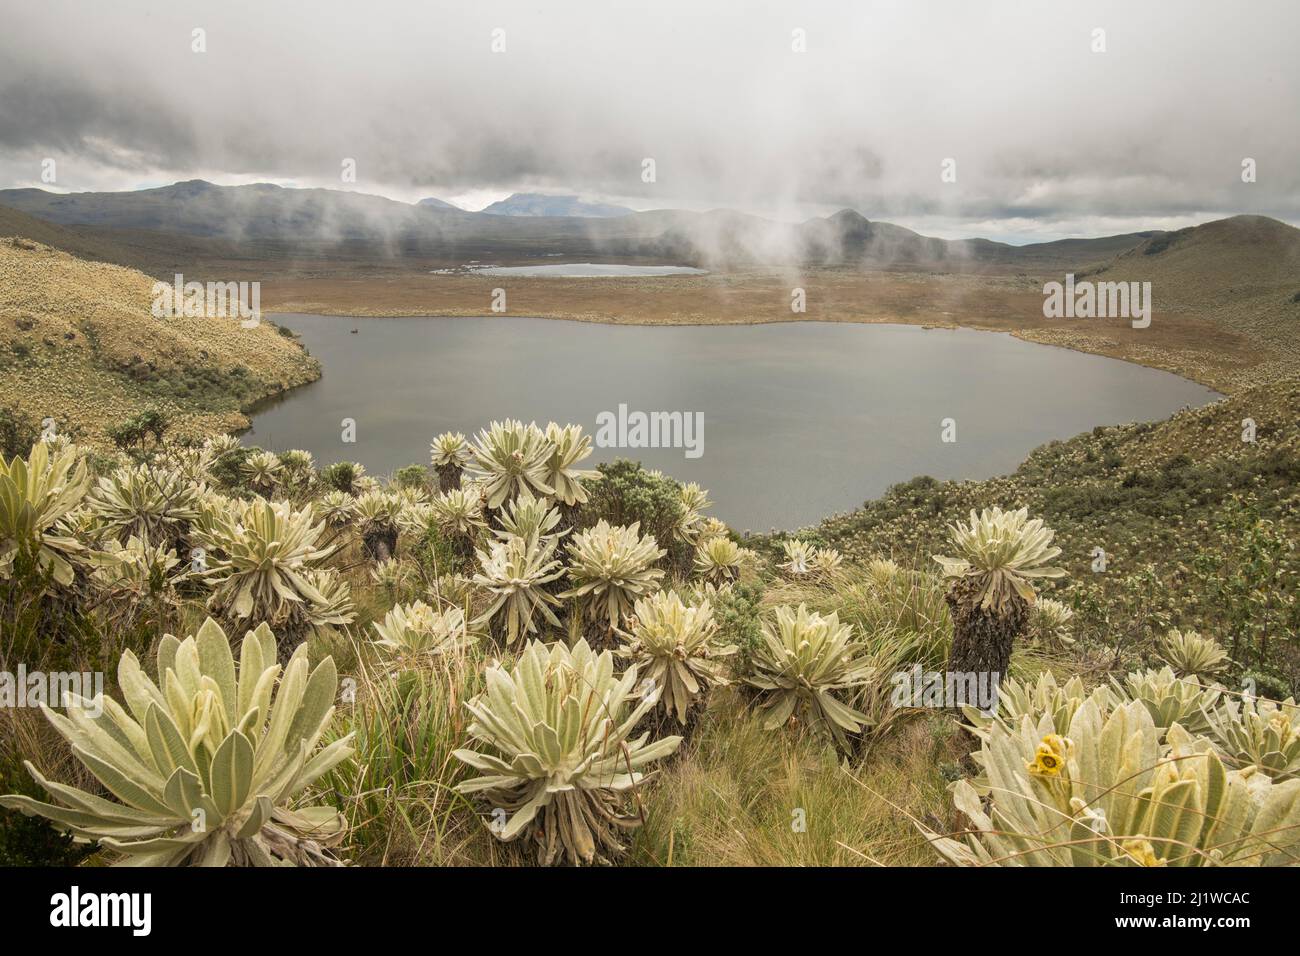 Field of Paramo flower / Frailejones (Espeletia pycnophylla) growing next to a lake, highland paramo, northern Ecuador. Stock Photo